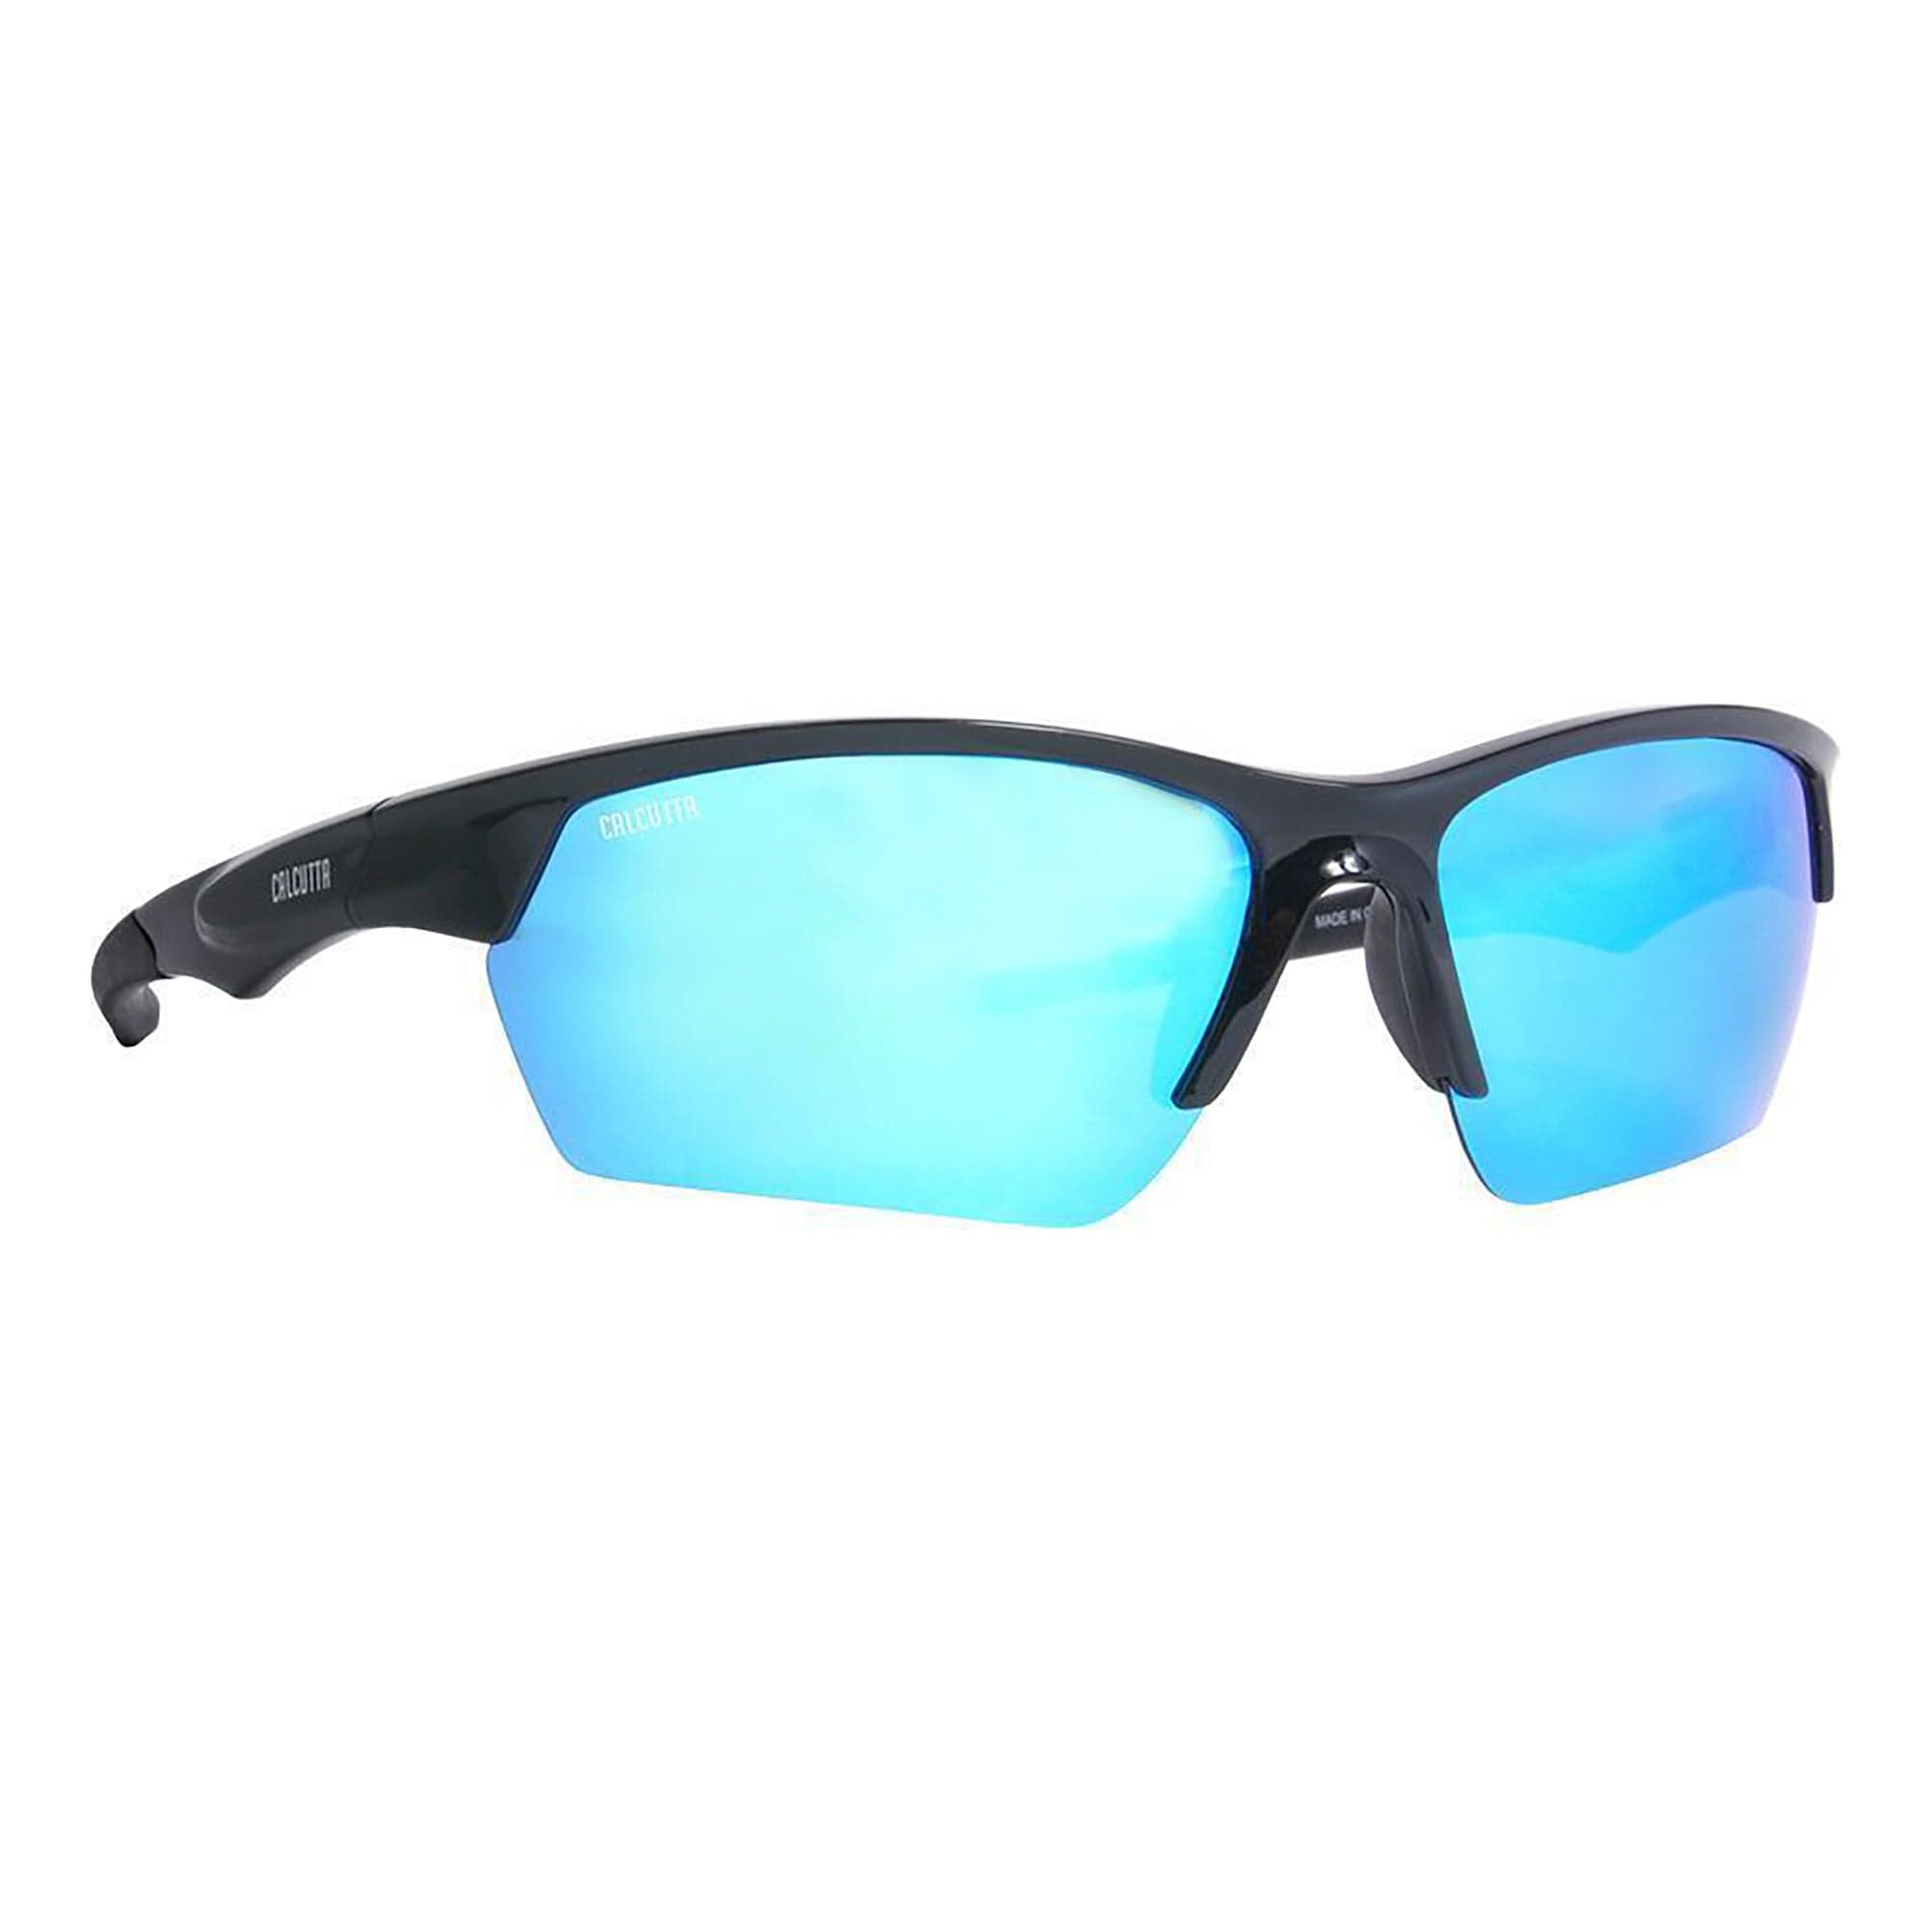 Sunglasses Shiny Black Frame Blue Mirror Lens Calcutta First Strike FS